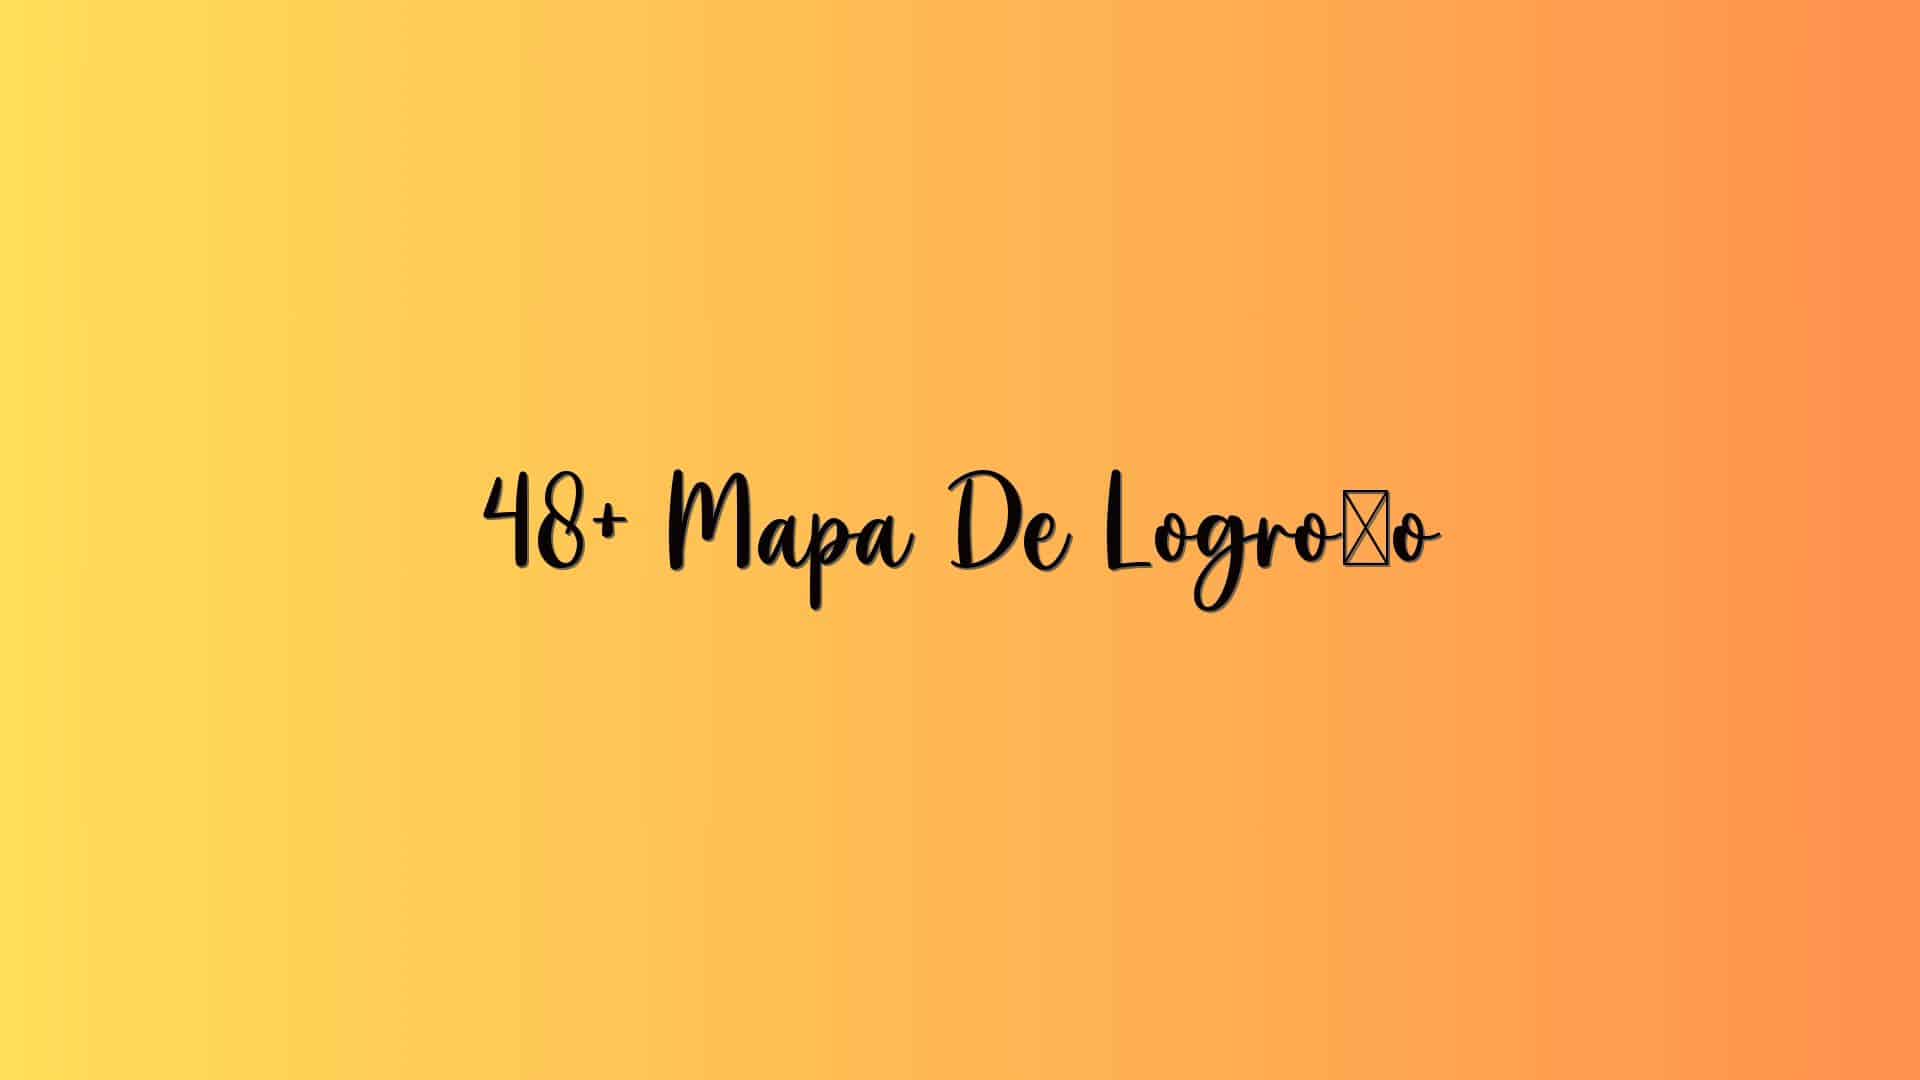 48+ Mapa De Logroño